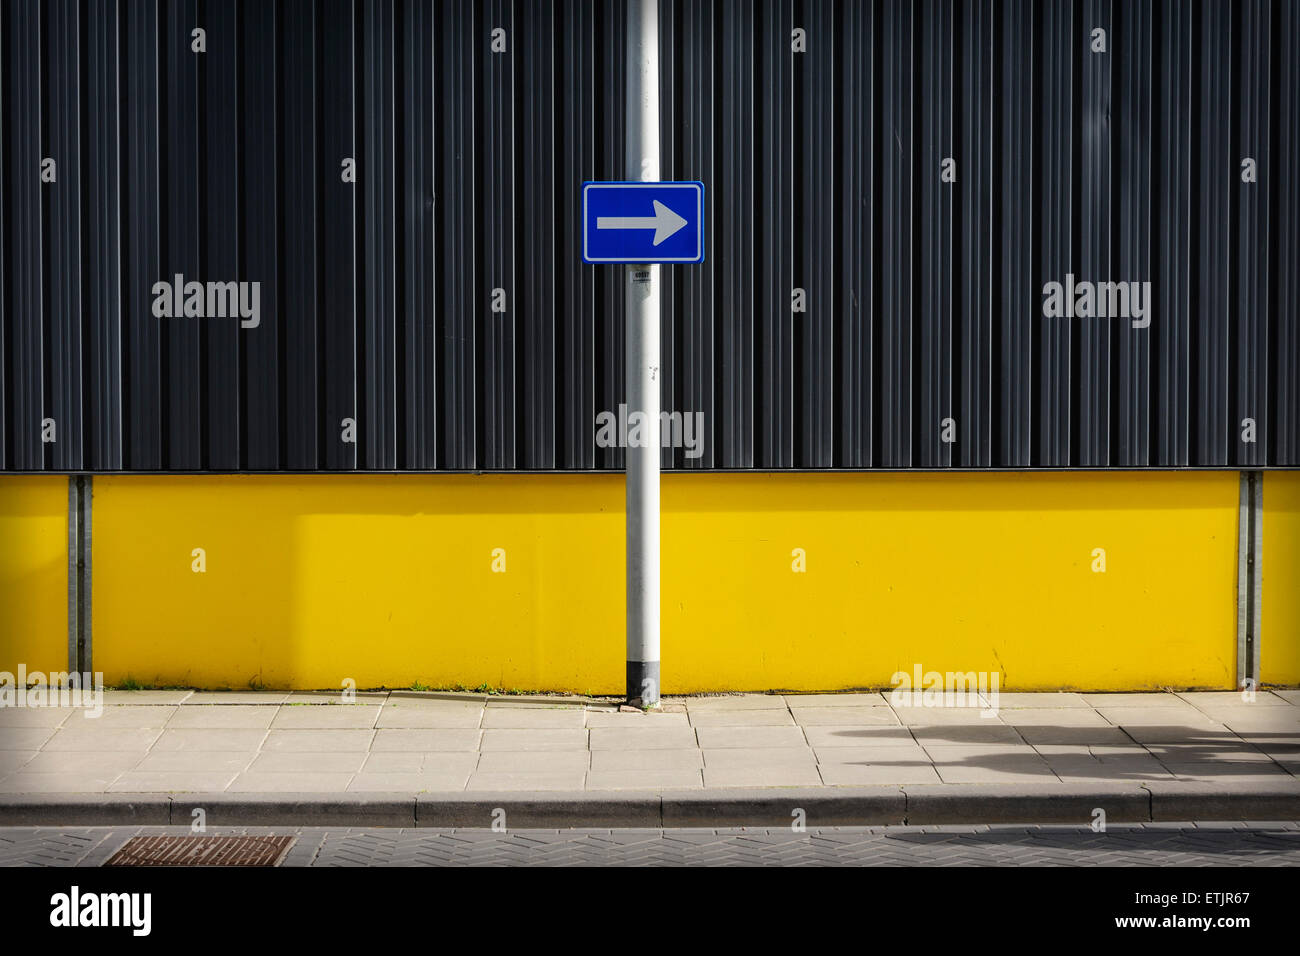 Verkehrsschild, Pfeil rechts gegen gelbe Wand zeigend Stockfoto